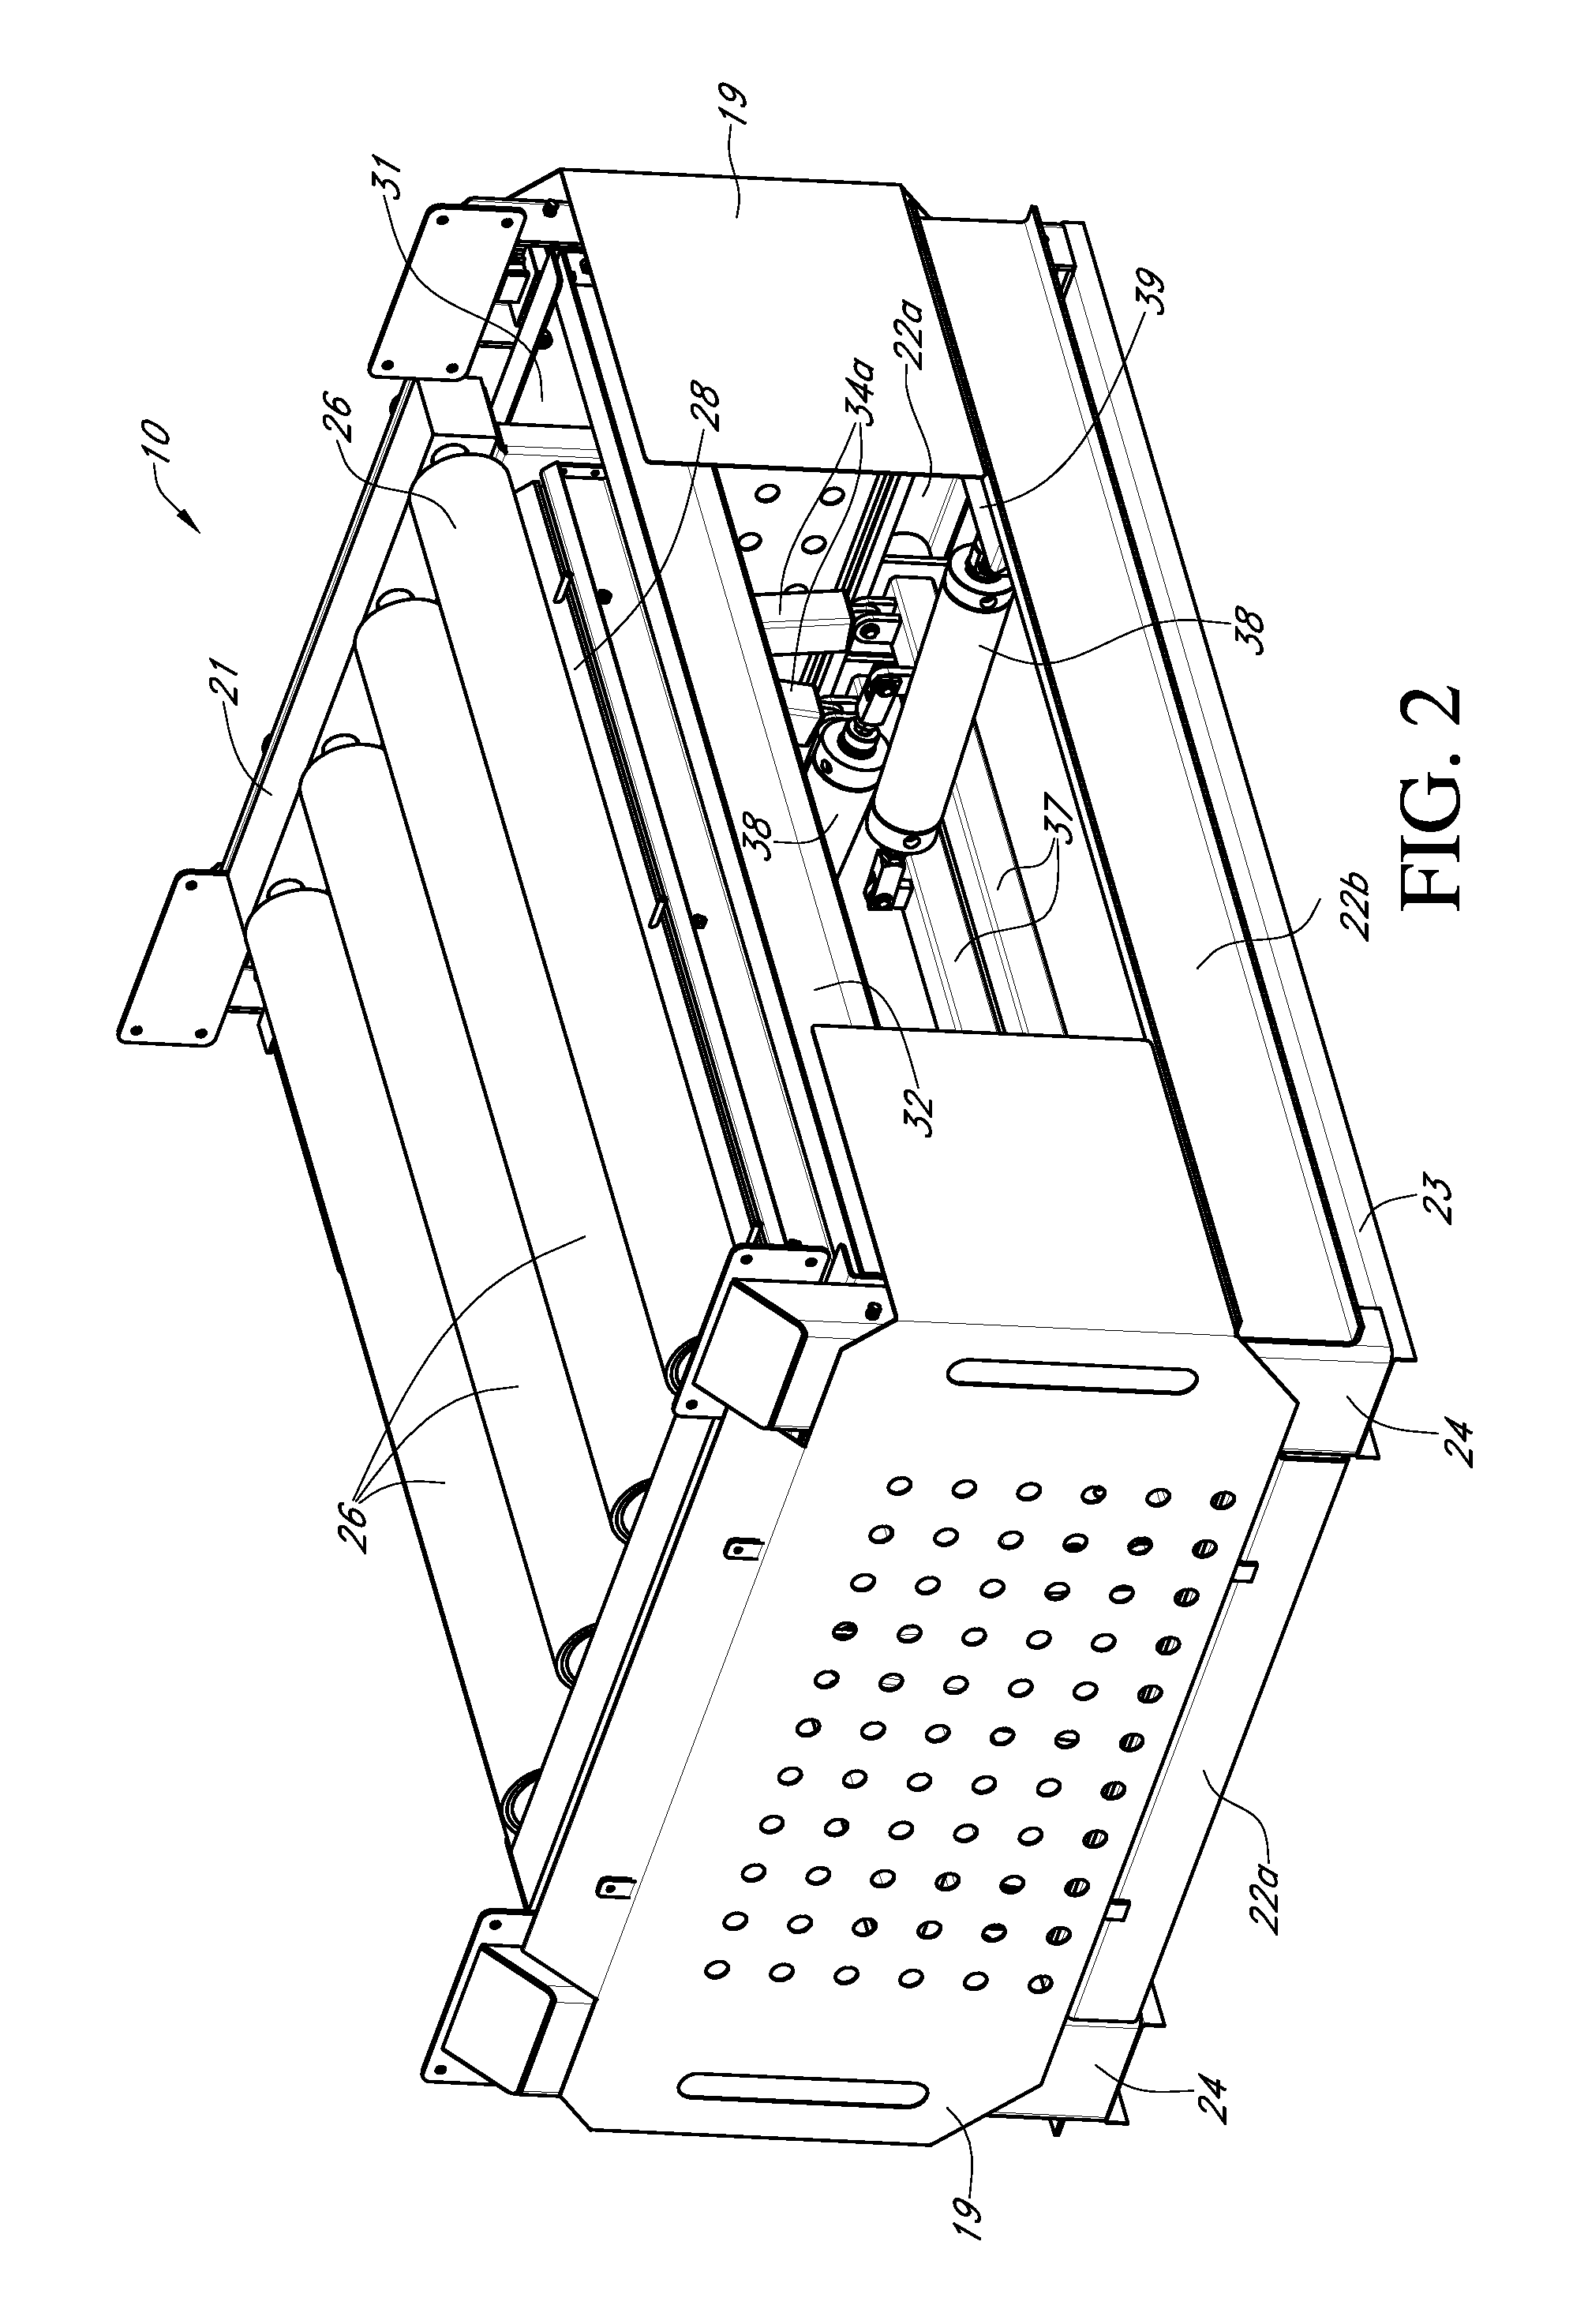 Conveyor tensioning system